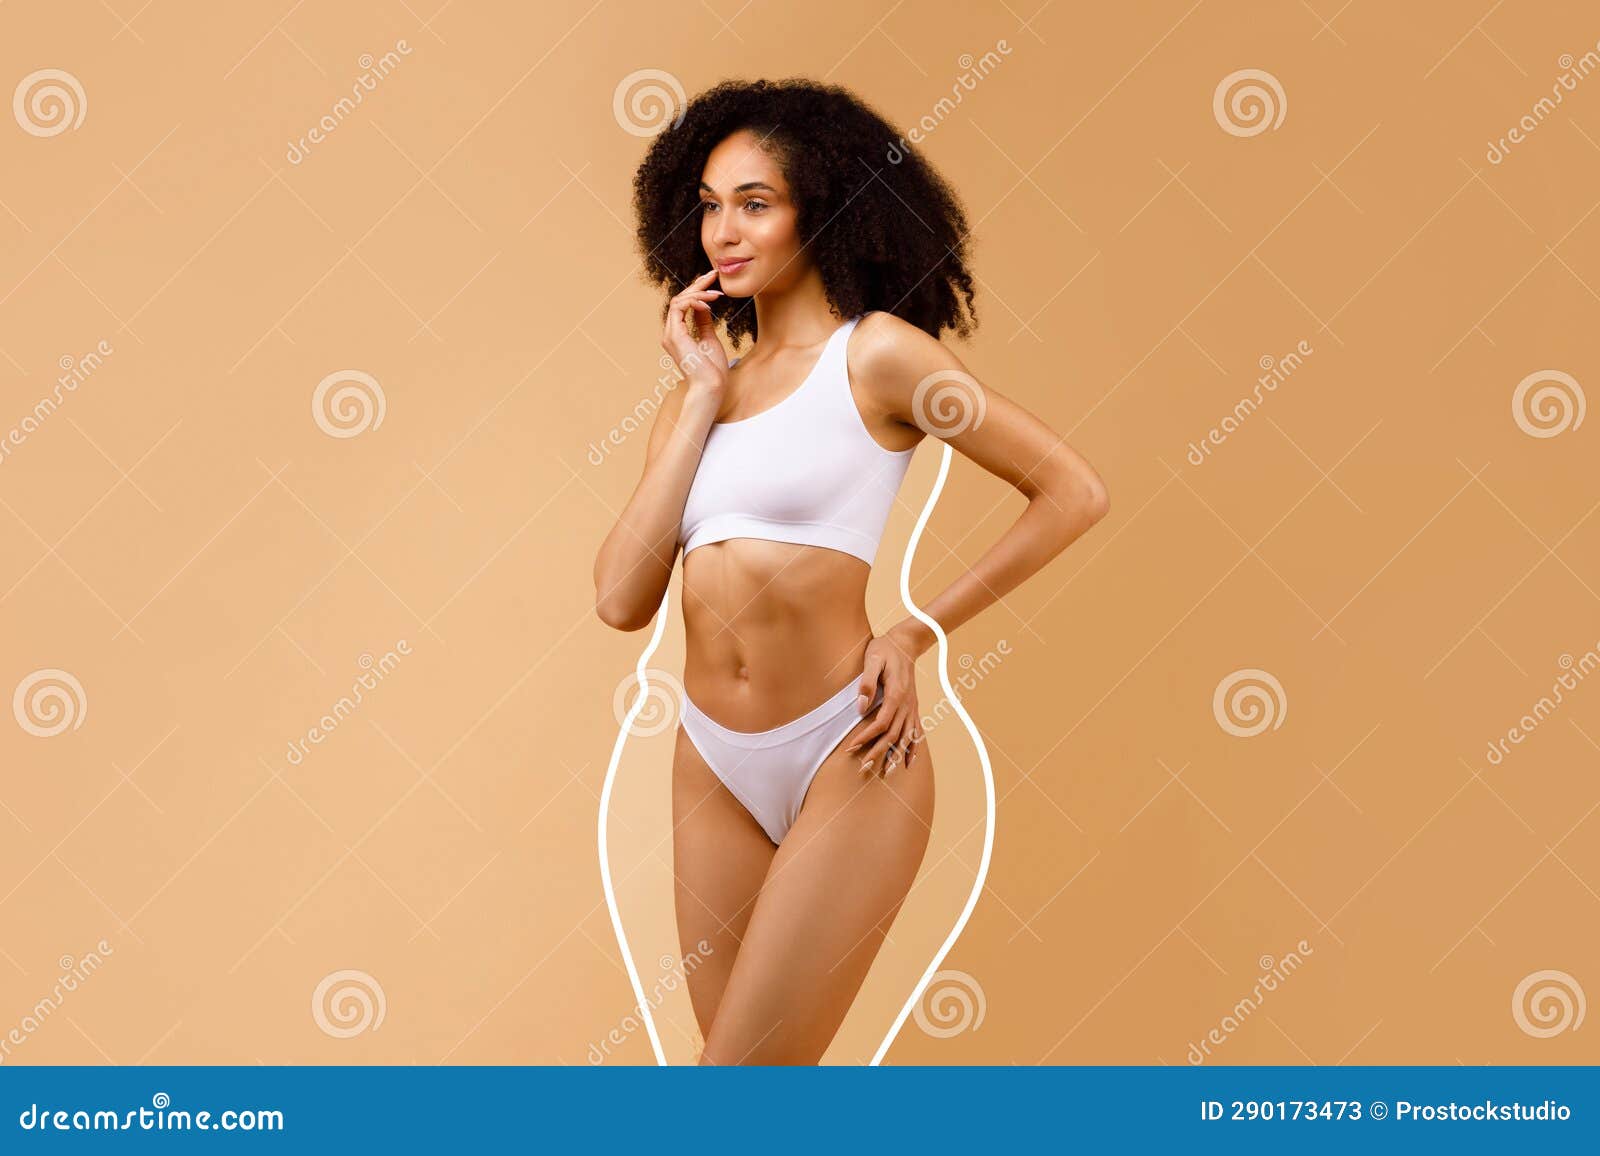 https://thumbs.dreamstime.com/z/slim-black-lady-perfect-body-shape-posing-underwear-fitness-diet-concept-tender-slim-black-lady-perfect-body-290173473.jpg